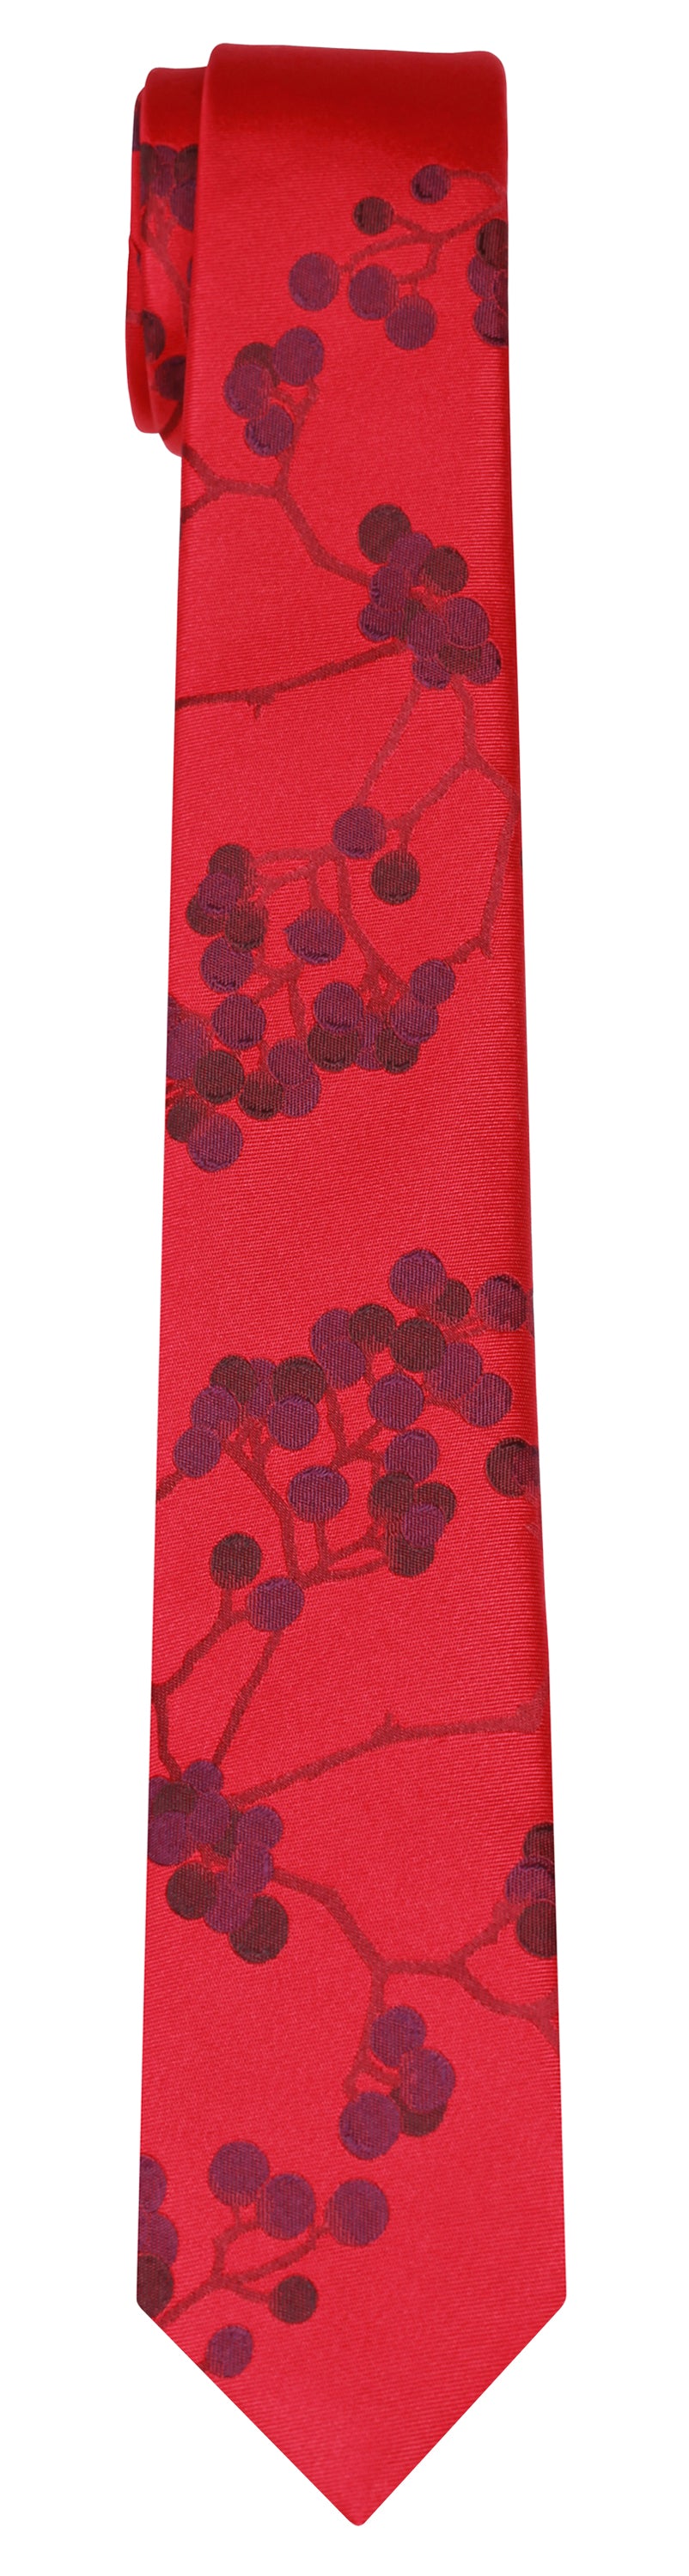 Mimi Fong Berries Tie in Amaryllis